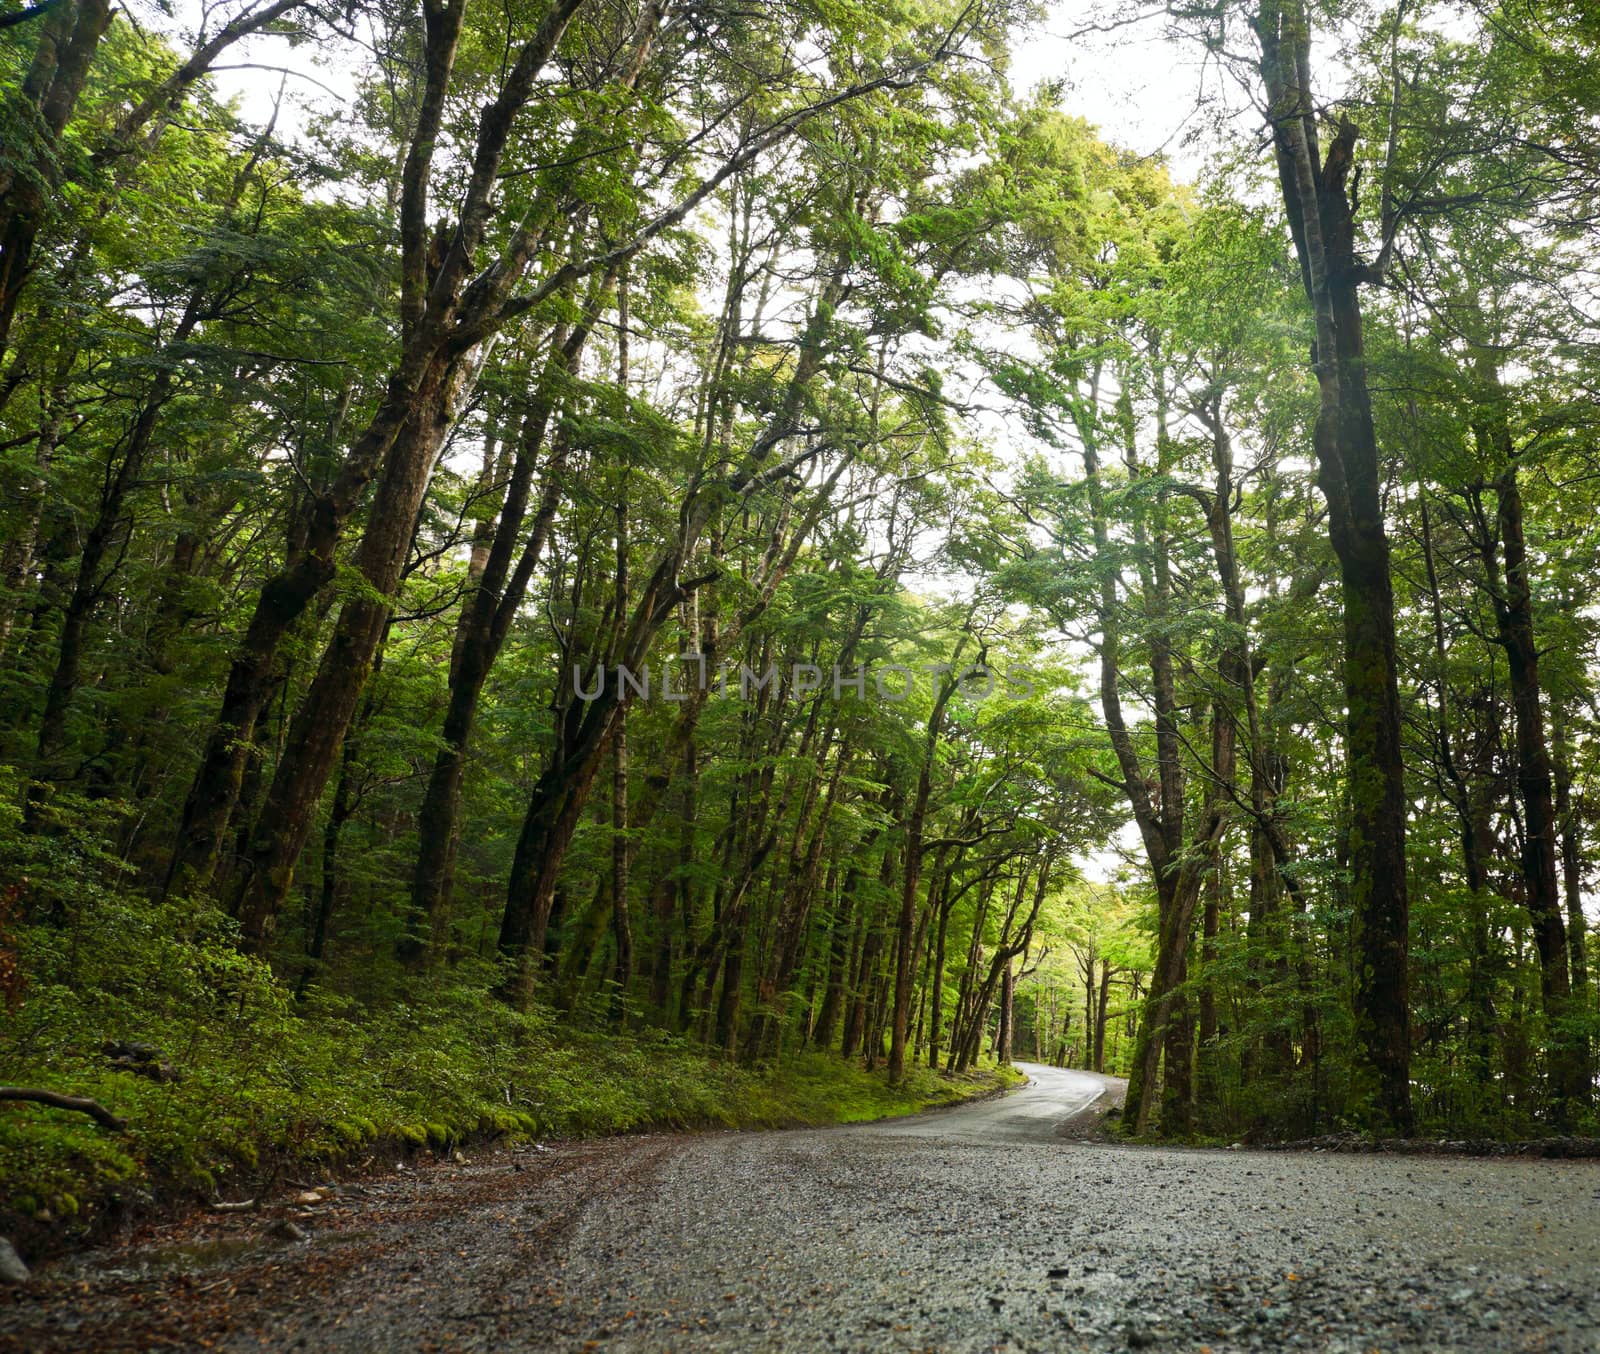 Rainforest road by naumoid